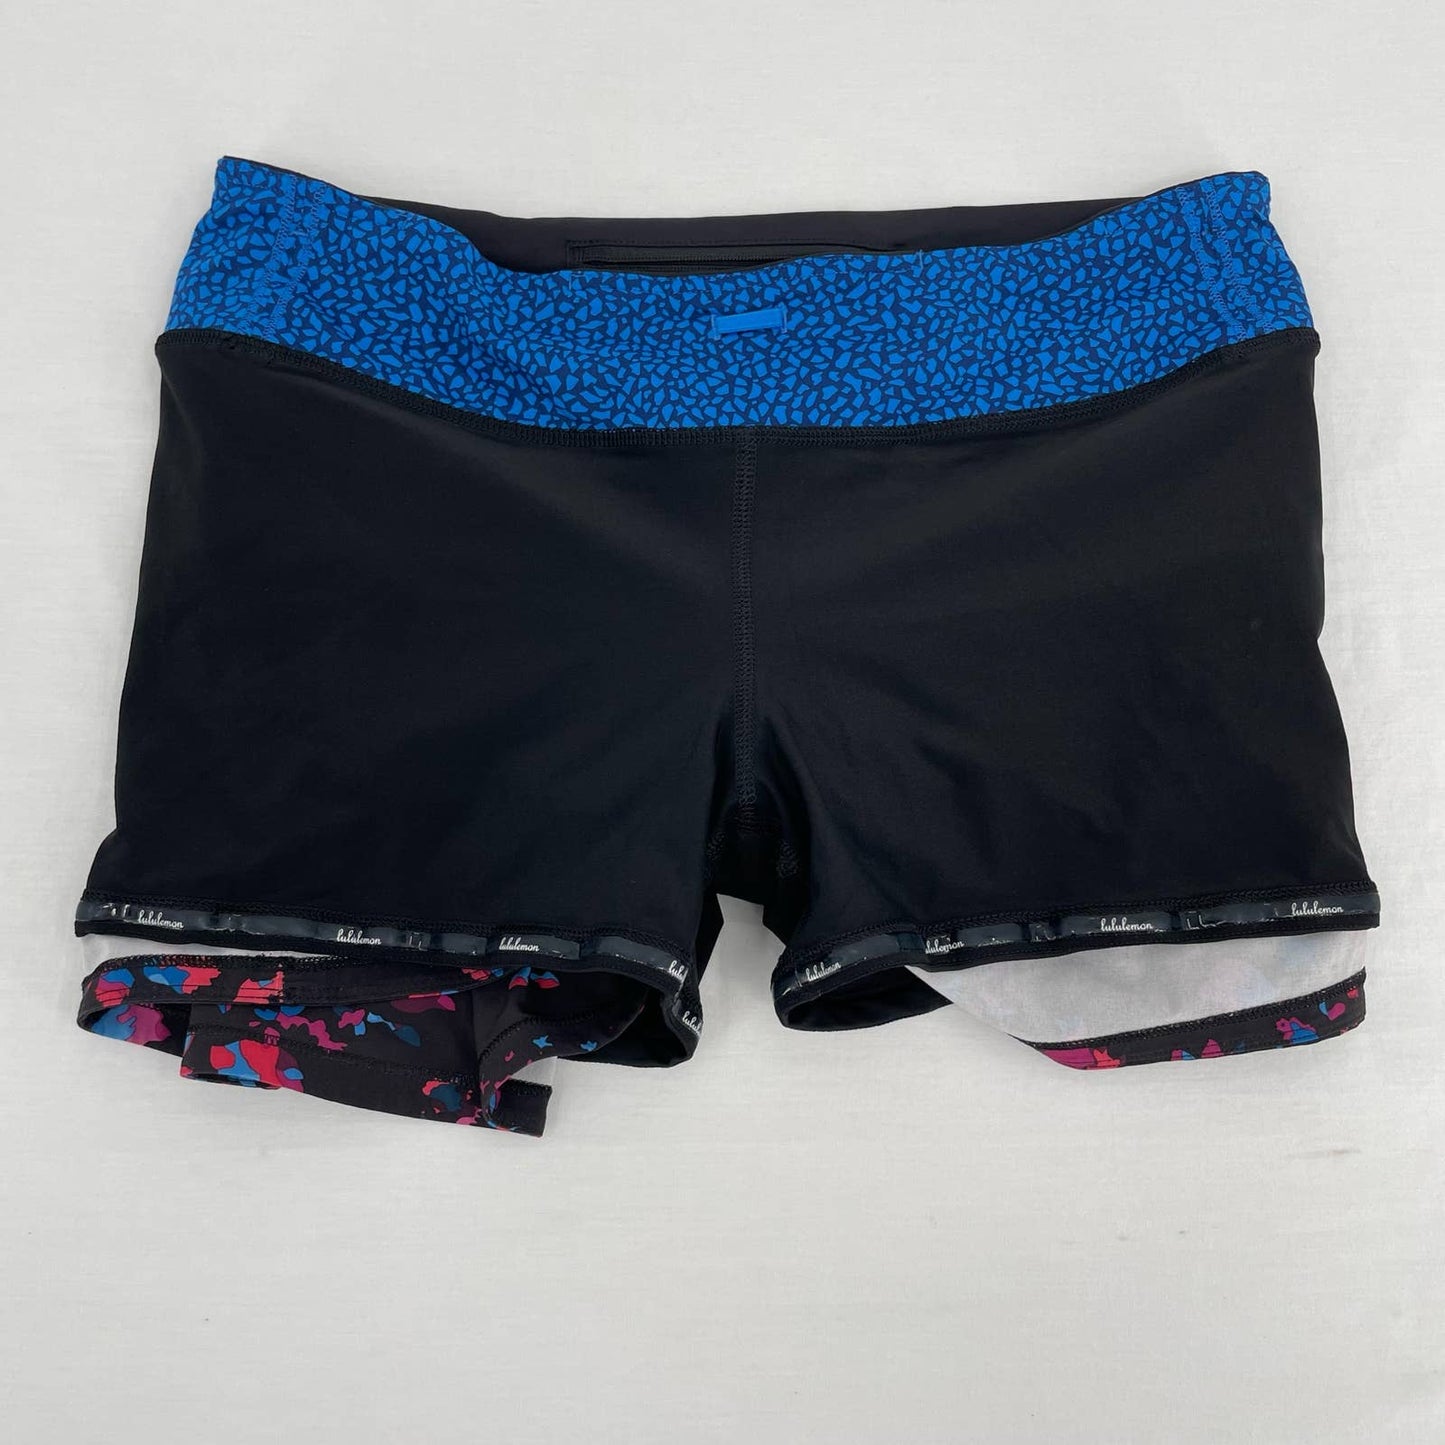 Lululemon Pace Rival II Dandy Digie Multi Black Pink Blue Print Athletic Skirt Size 8